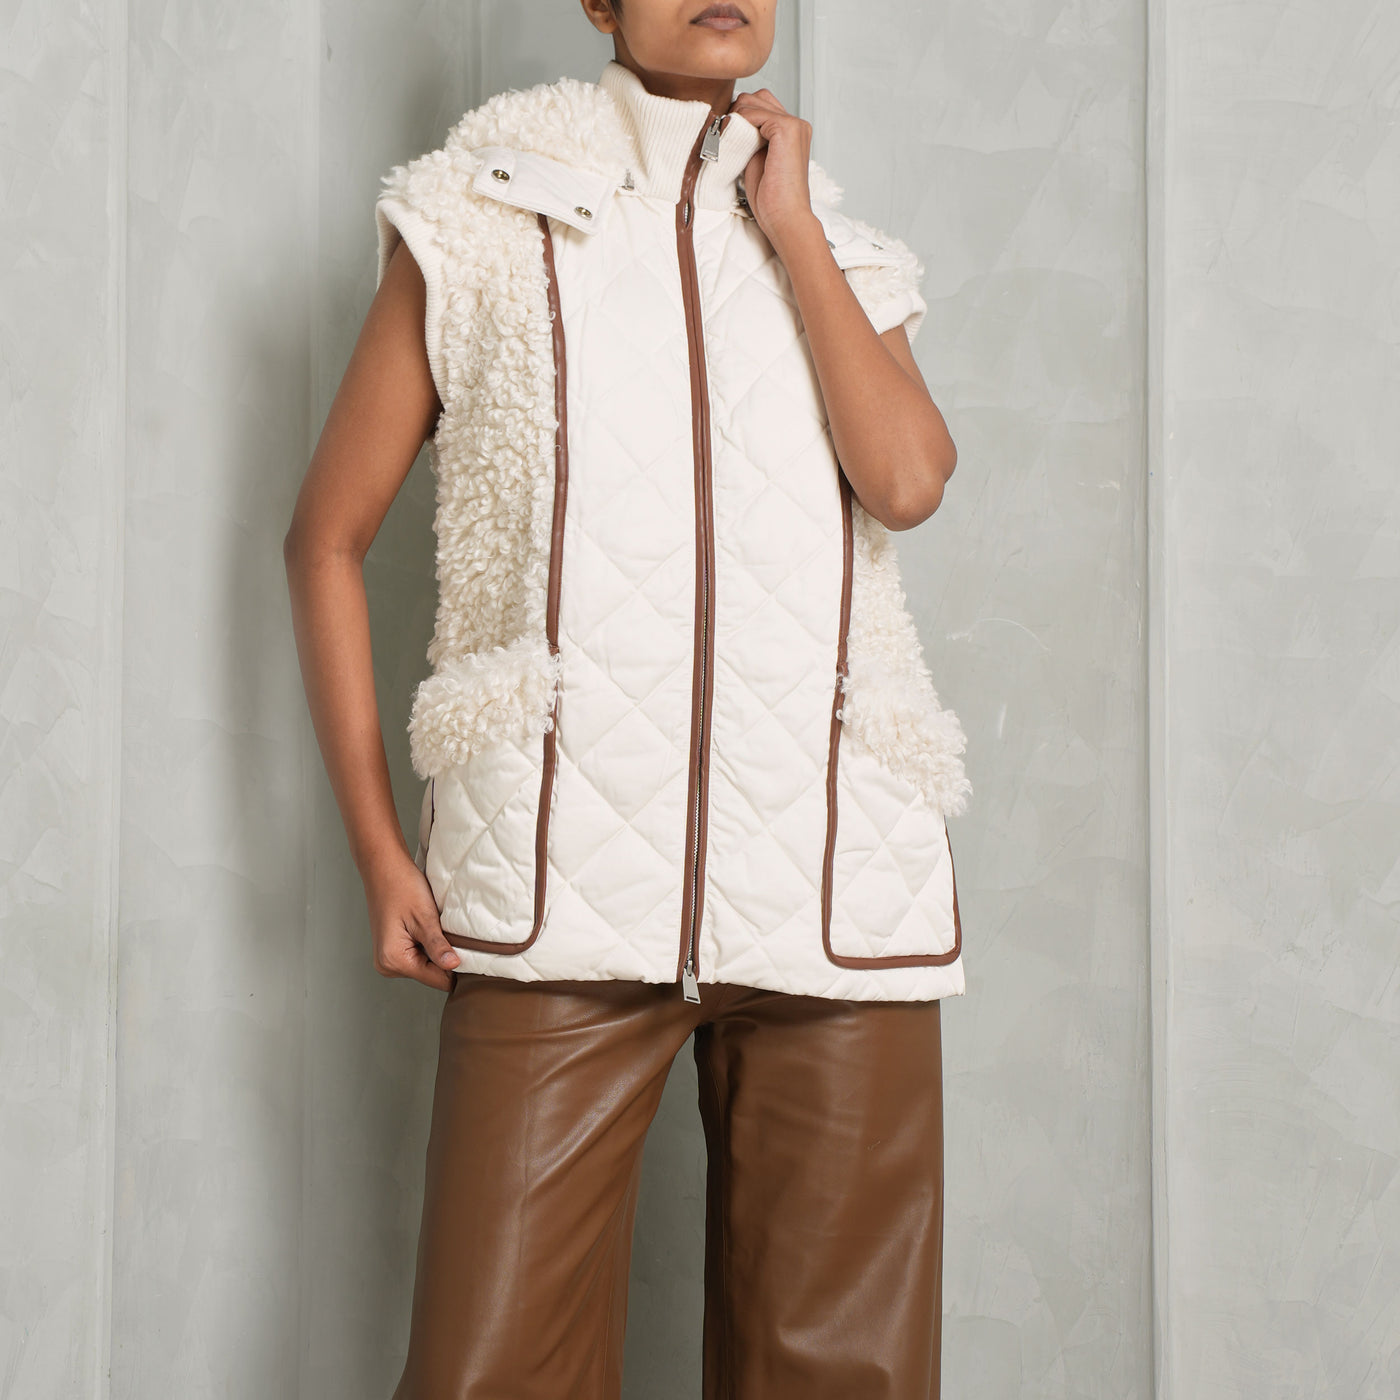 SIMKHAI white shearling sleeveless vest